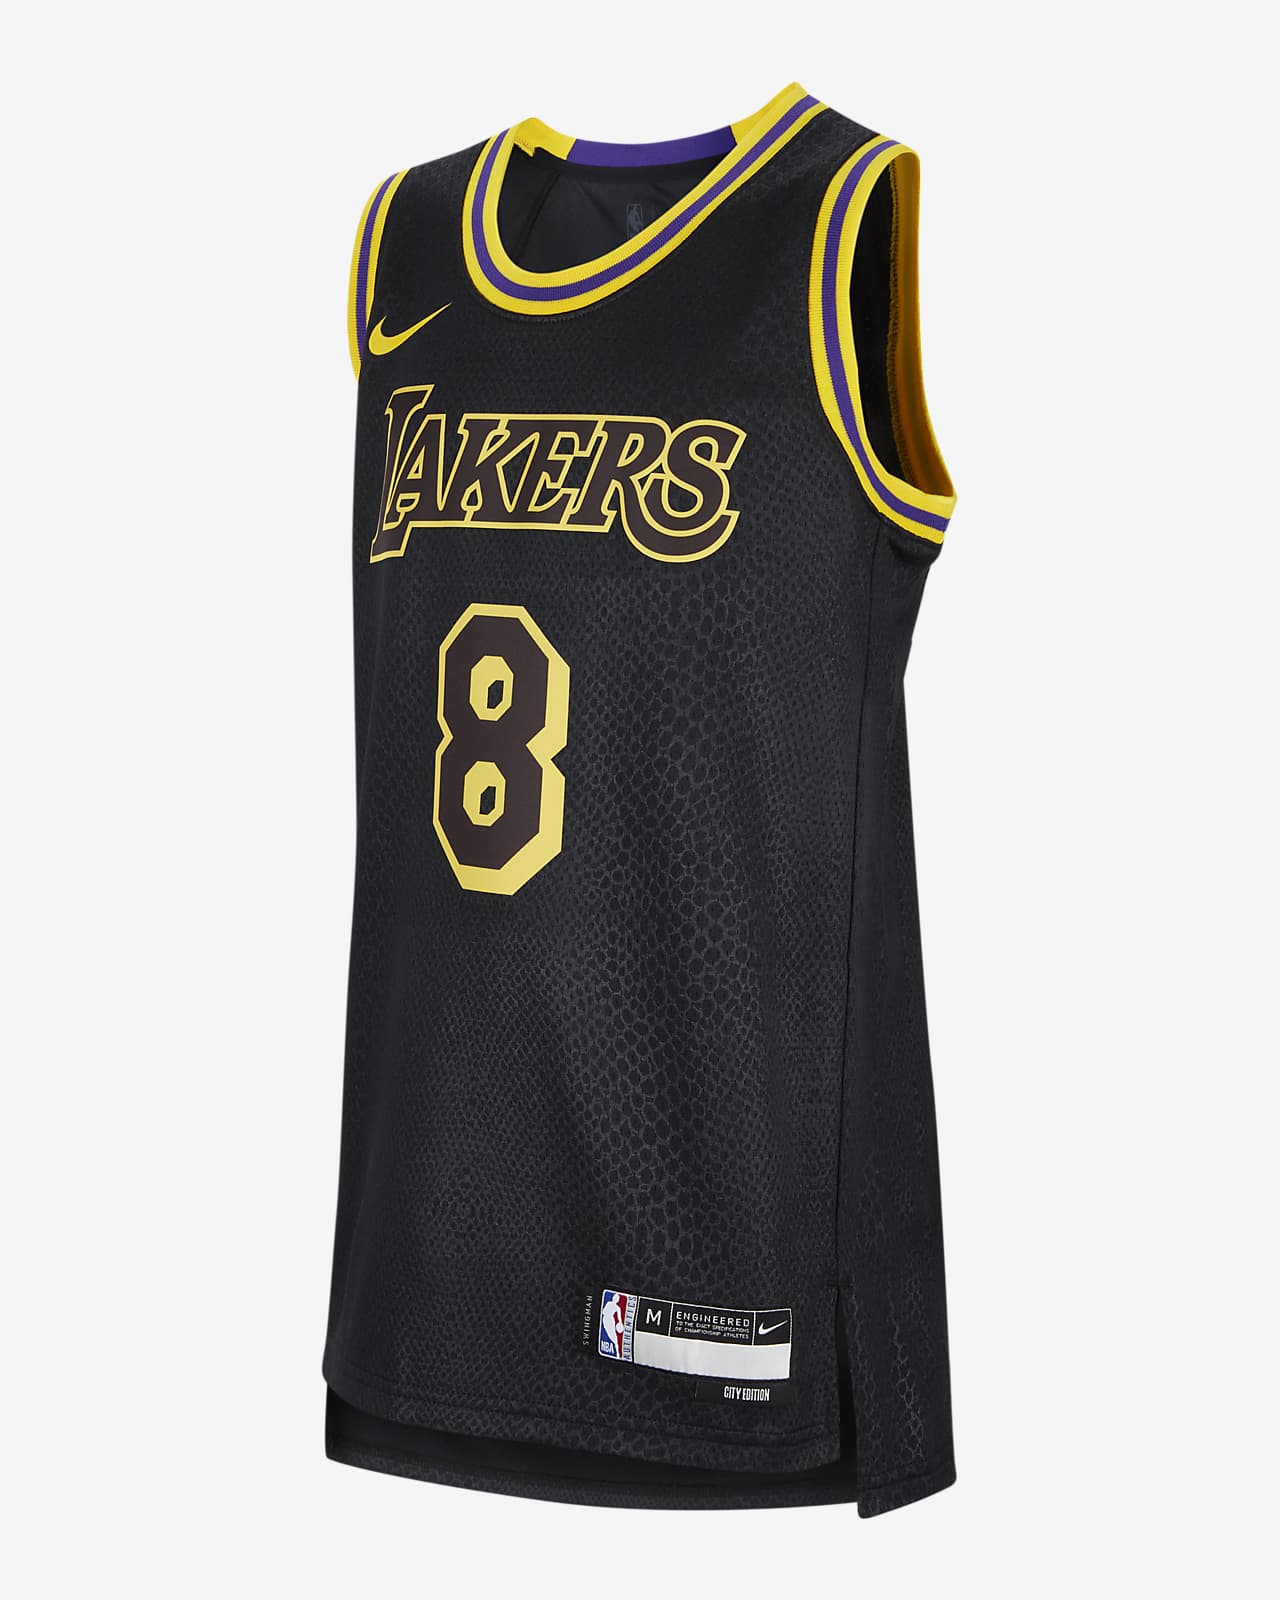 Kobe Bryant Los Angeles Lakers City Edition Nike Dri-FIT Swingman Trikot für ältere Kinder